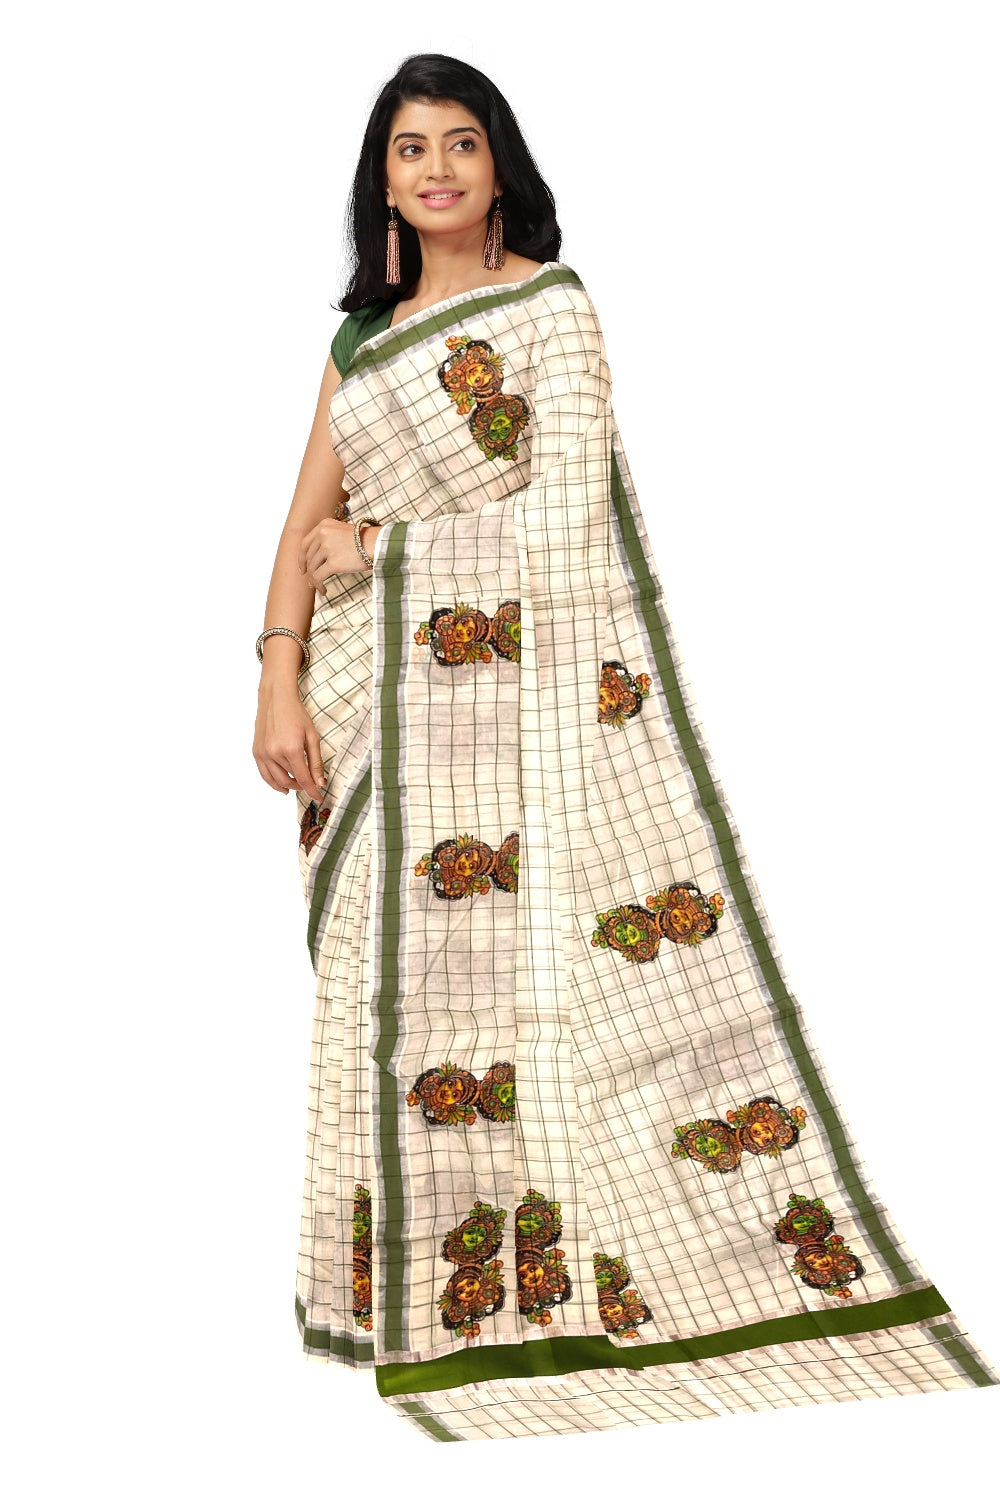 Pure Cotton Green Check Design Kerala Saree with Krishna Radha Mural Prints and Silver Border